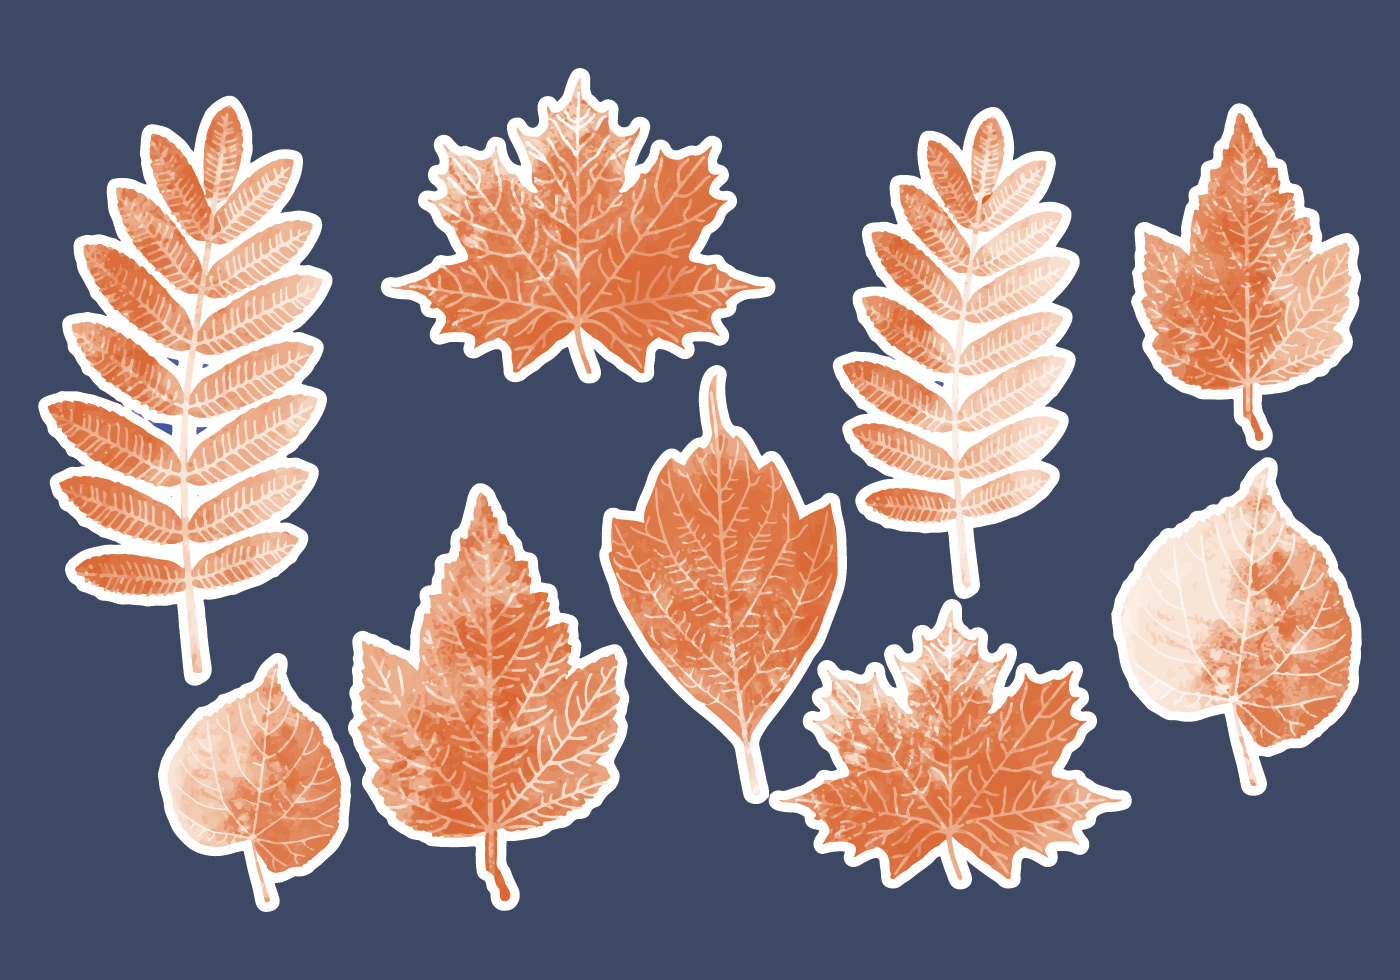 Истья коллекция в векторе. Oak leaves frame. Leaves collection